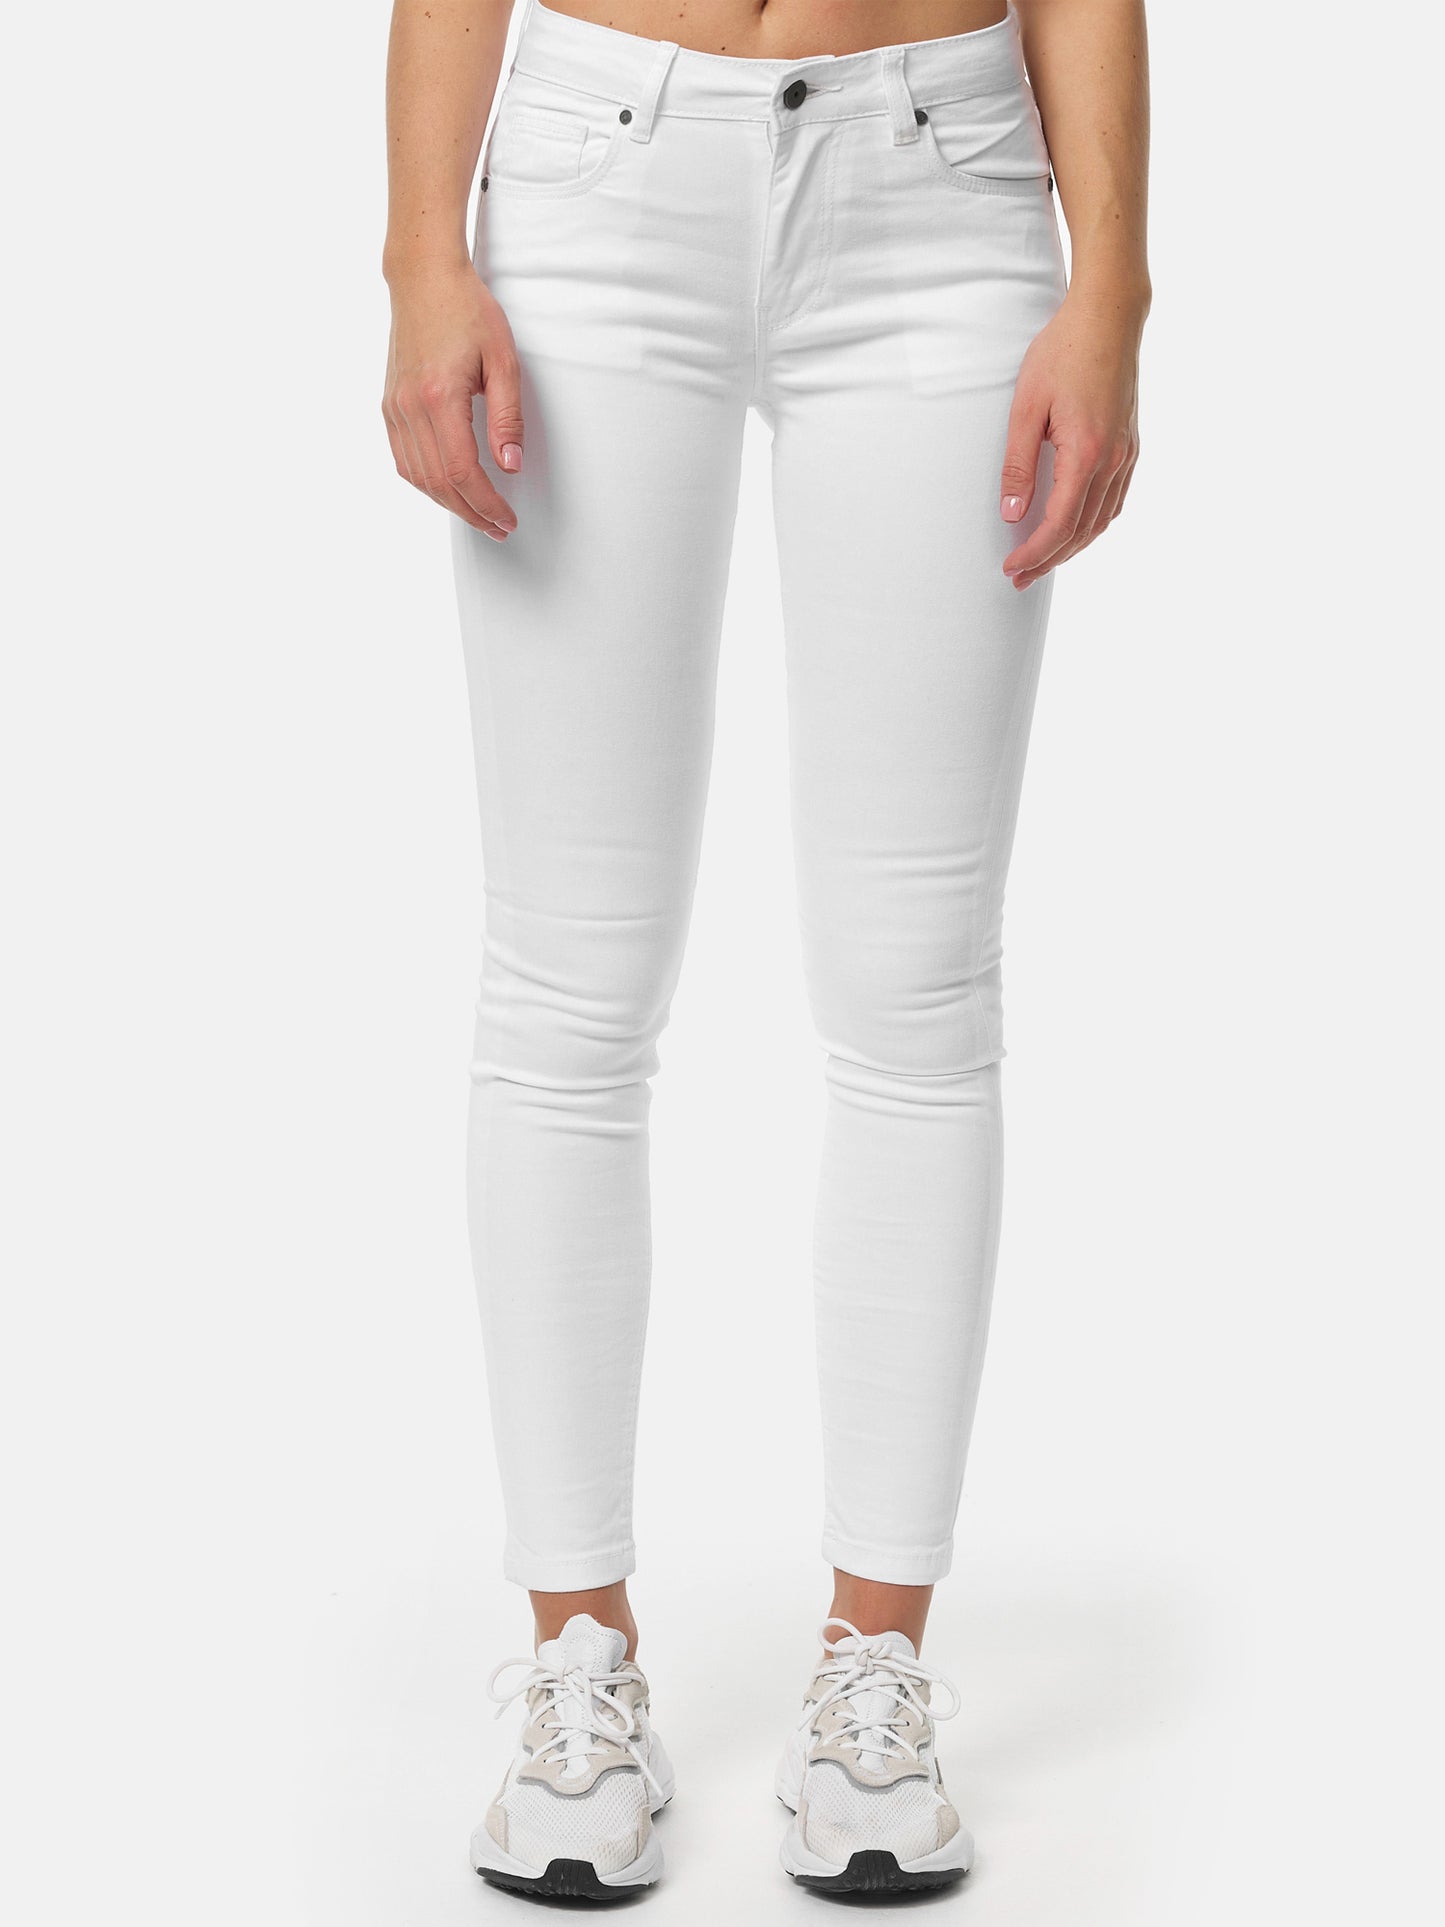 Tazzio Damen Skinny Fit Jeans F114